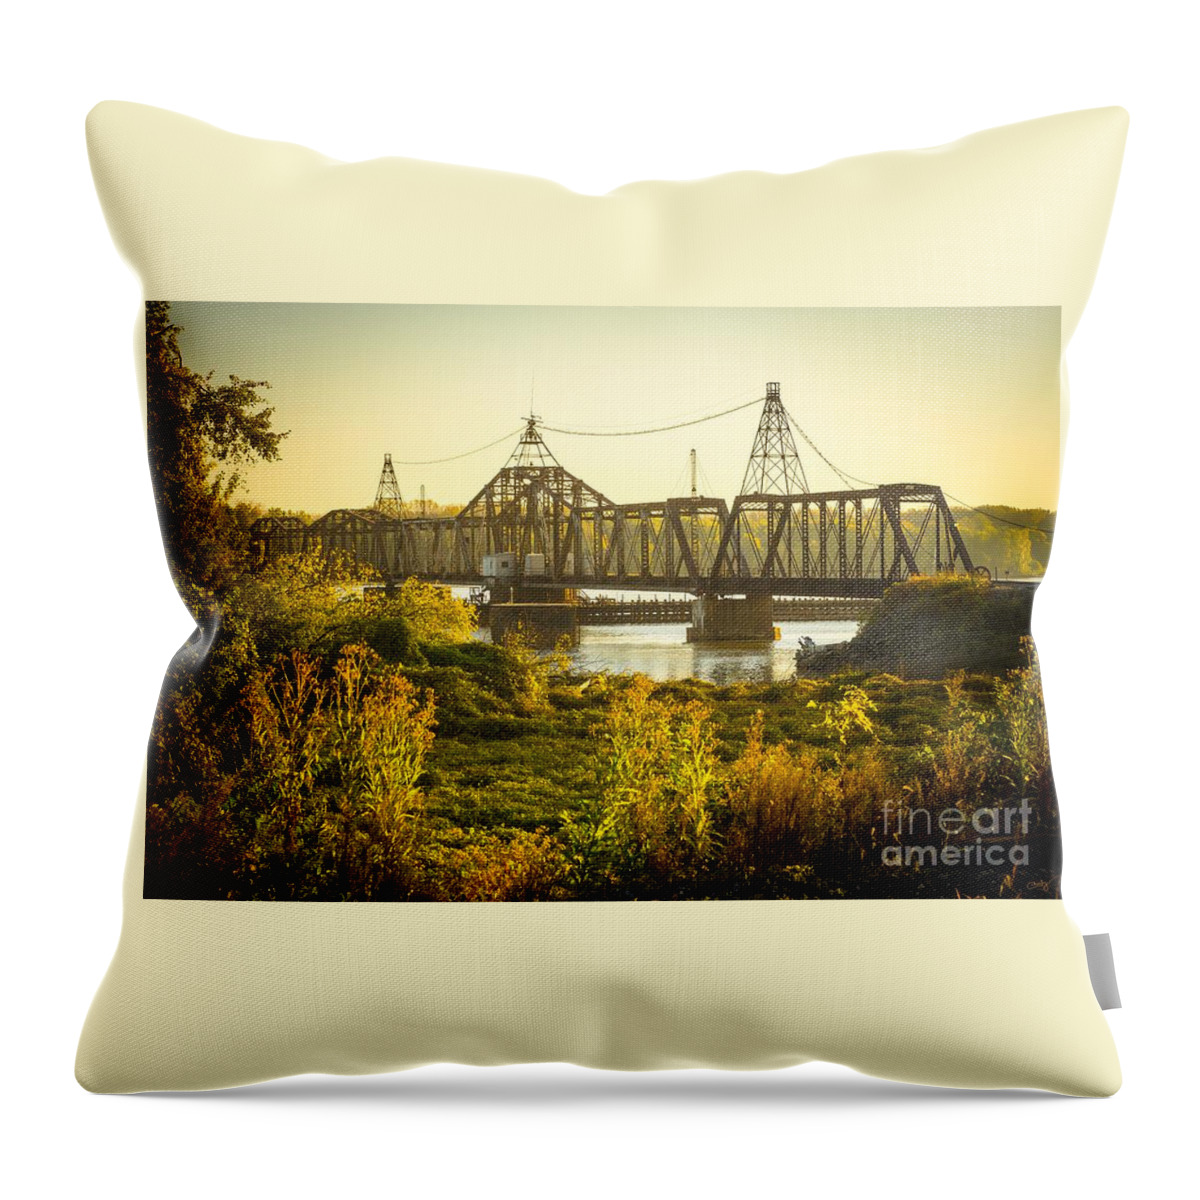 Louisiana Swing Bridge Throw Pillow featuring the photograph Louisiana Swing Bridge by Imagery by Charly